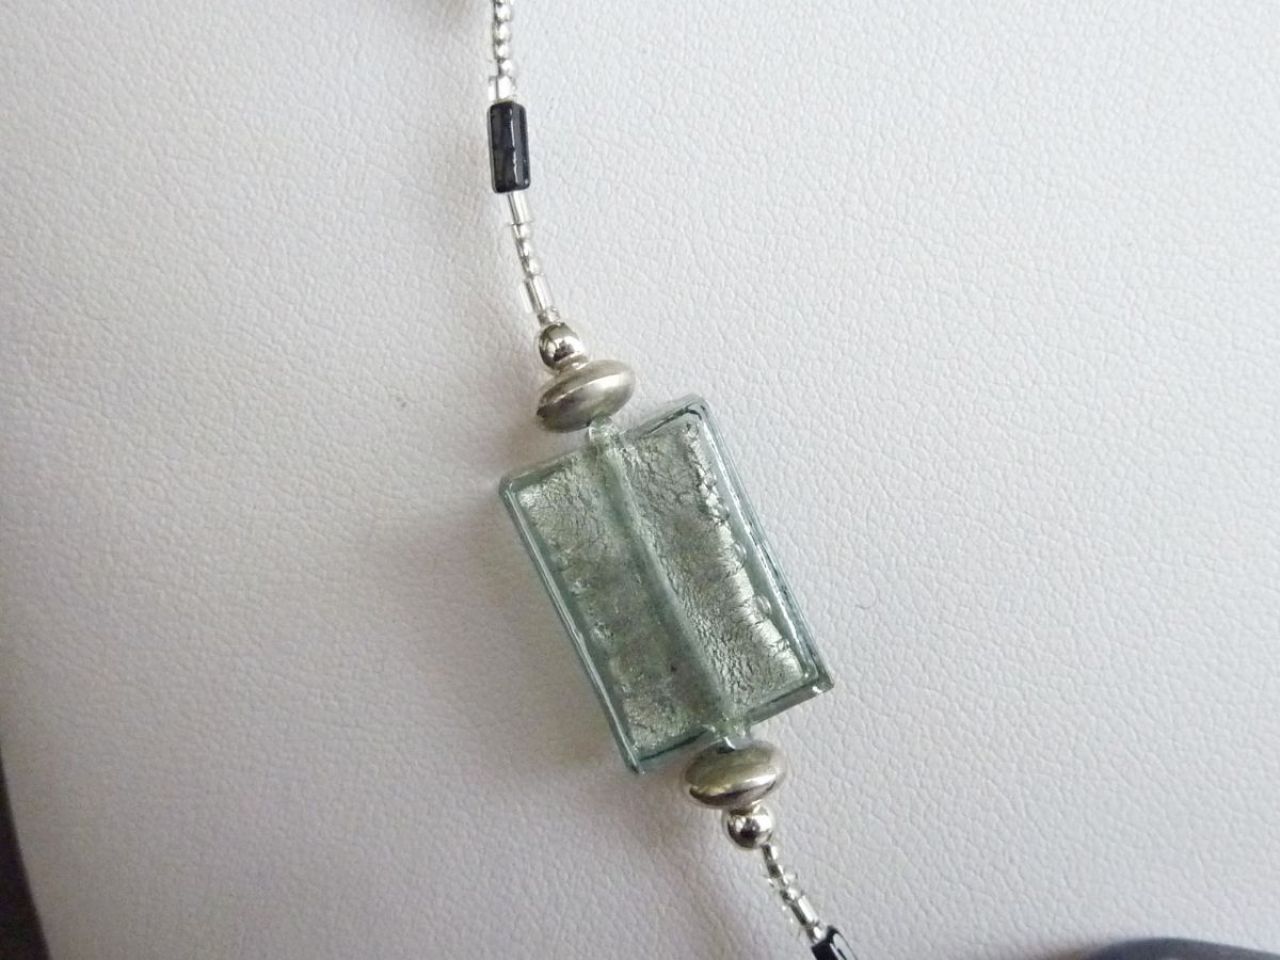 collier en verre de Murano, perles rectangulaires en gris foncé et clair